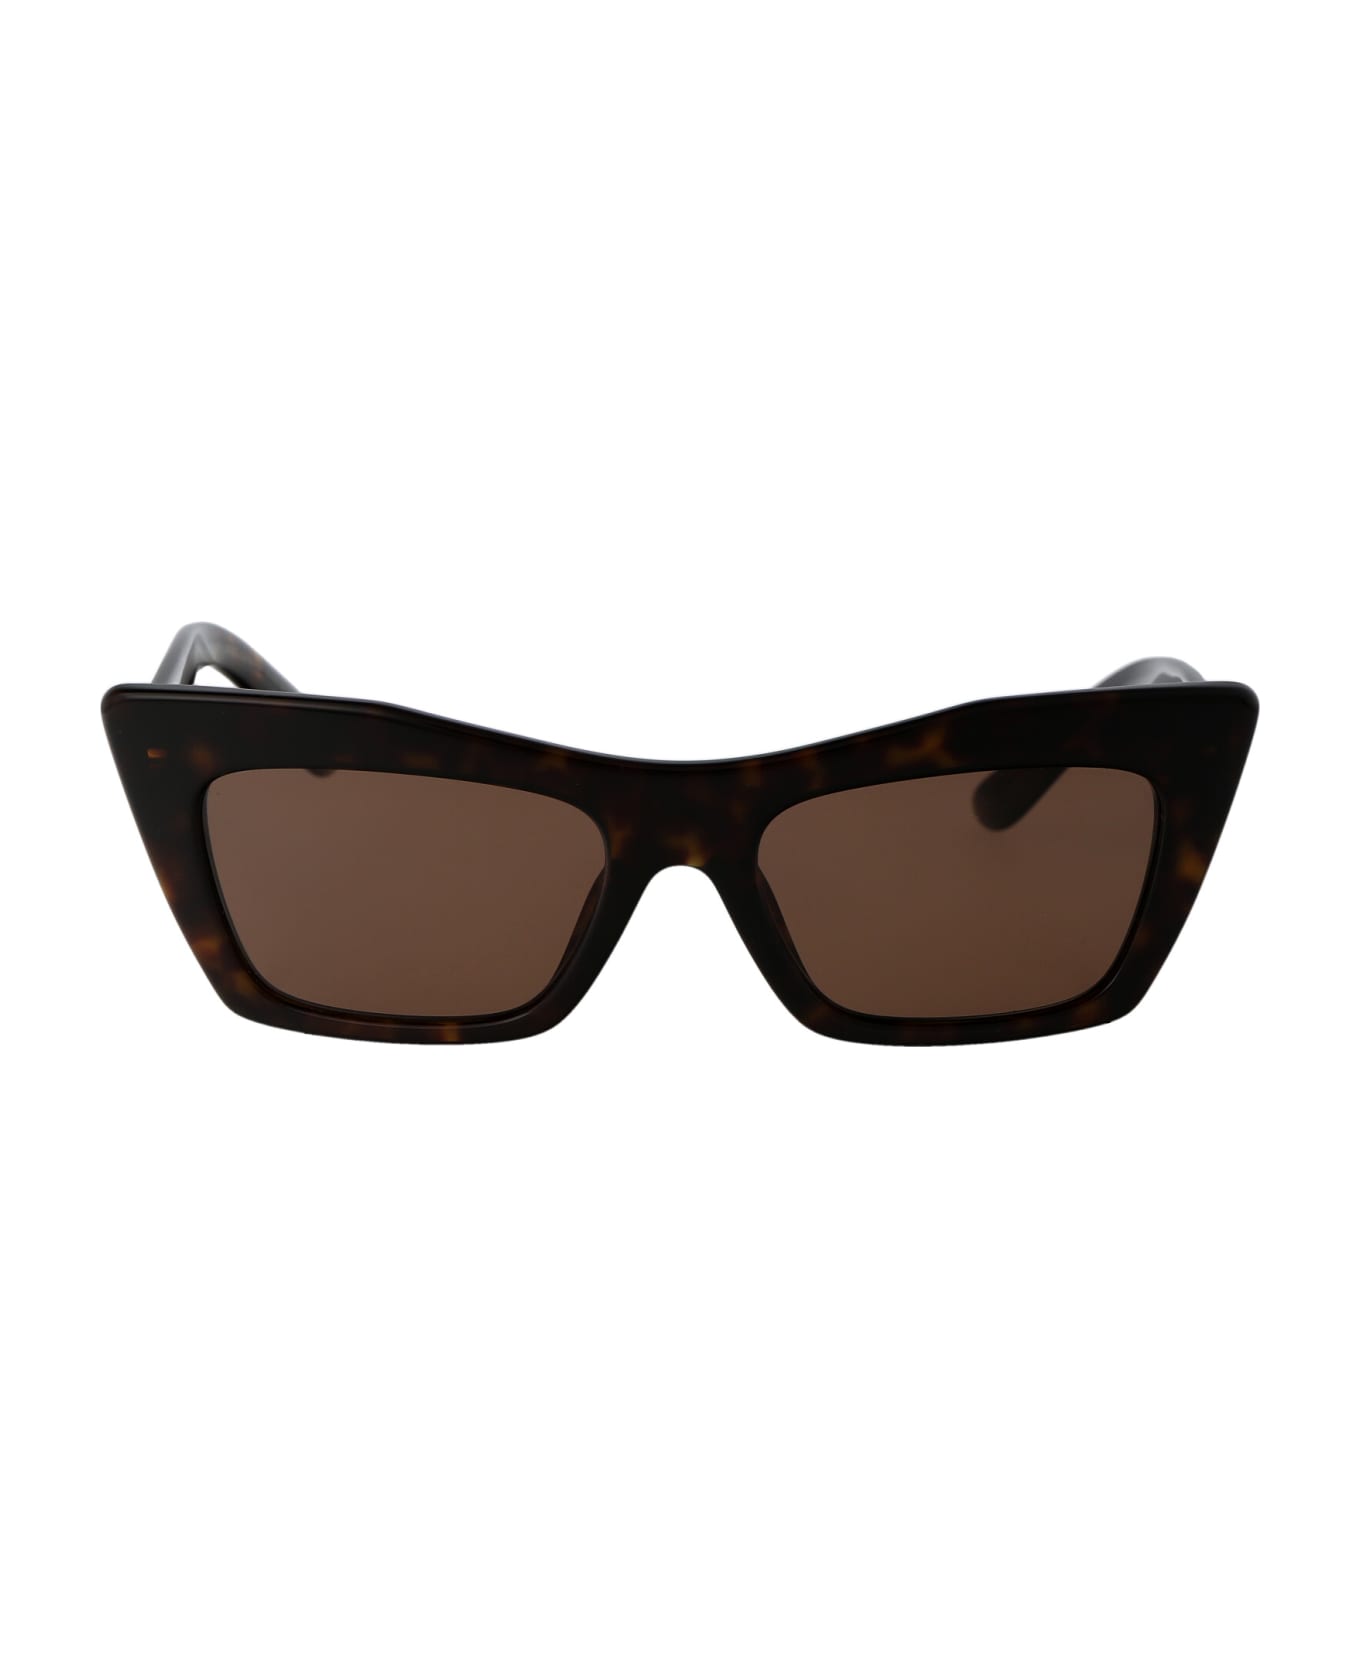 Eltin Nexum Sunglasses Eyewear 0dg4435 Sunglasses - 502/73 HAVANA